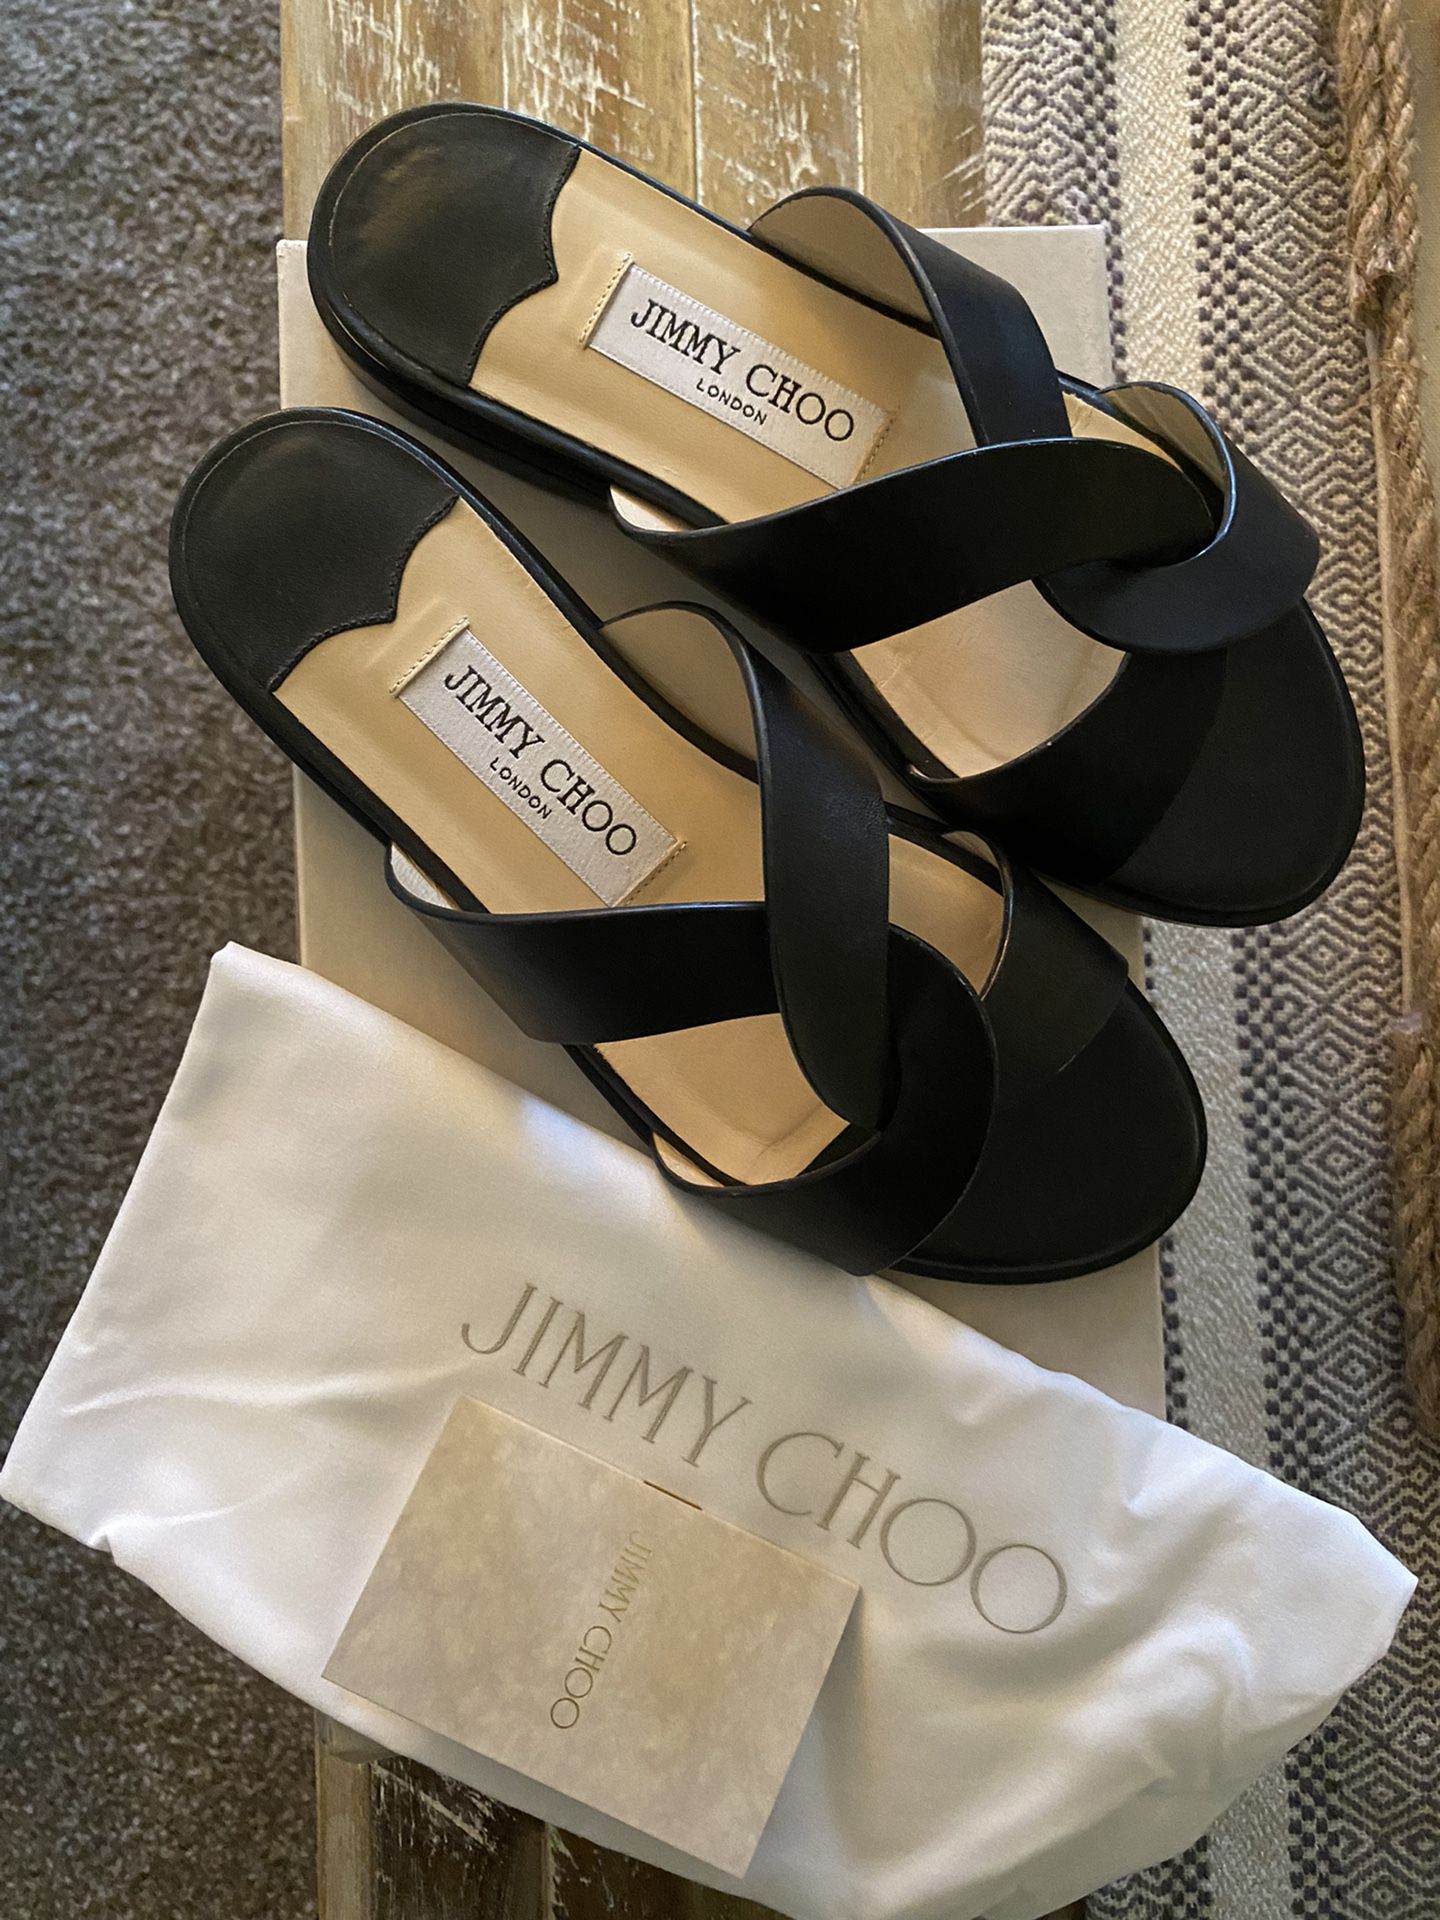 Jimmy Choo Black Leather Flat Sandals Size 35